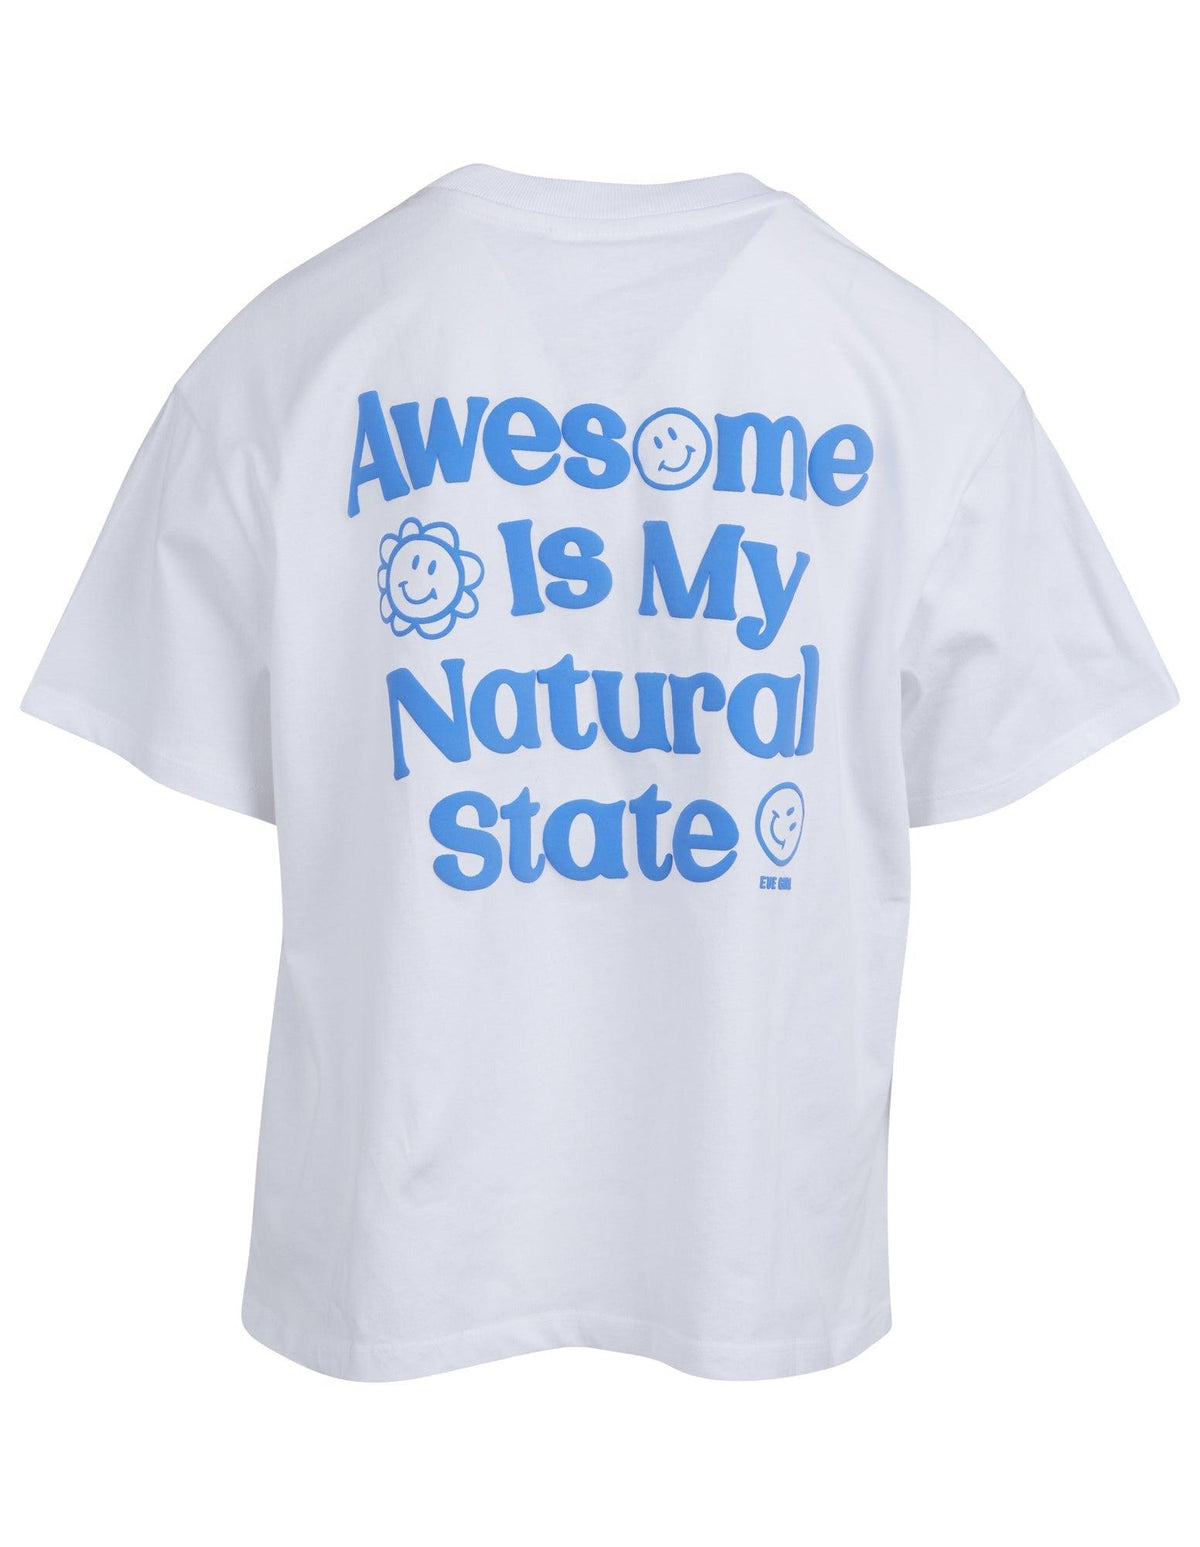 Eve Girl 3-7-Kids Natural State Tee White-Edge Clothing